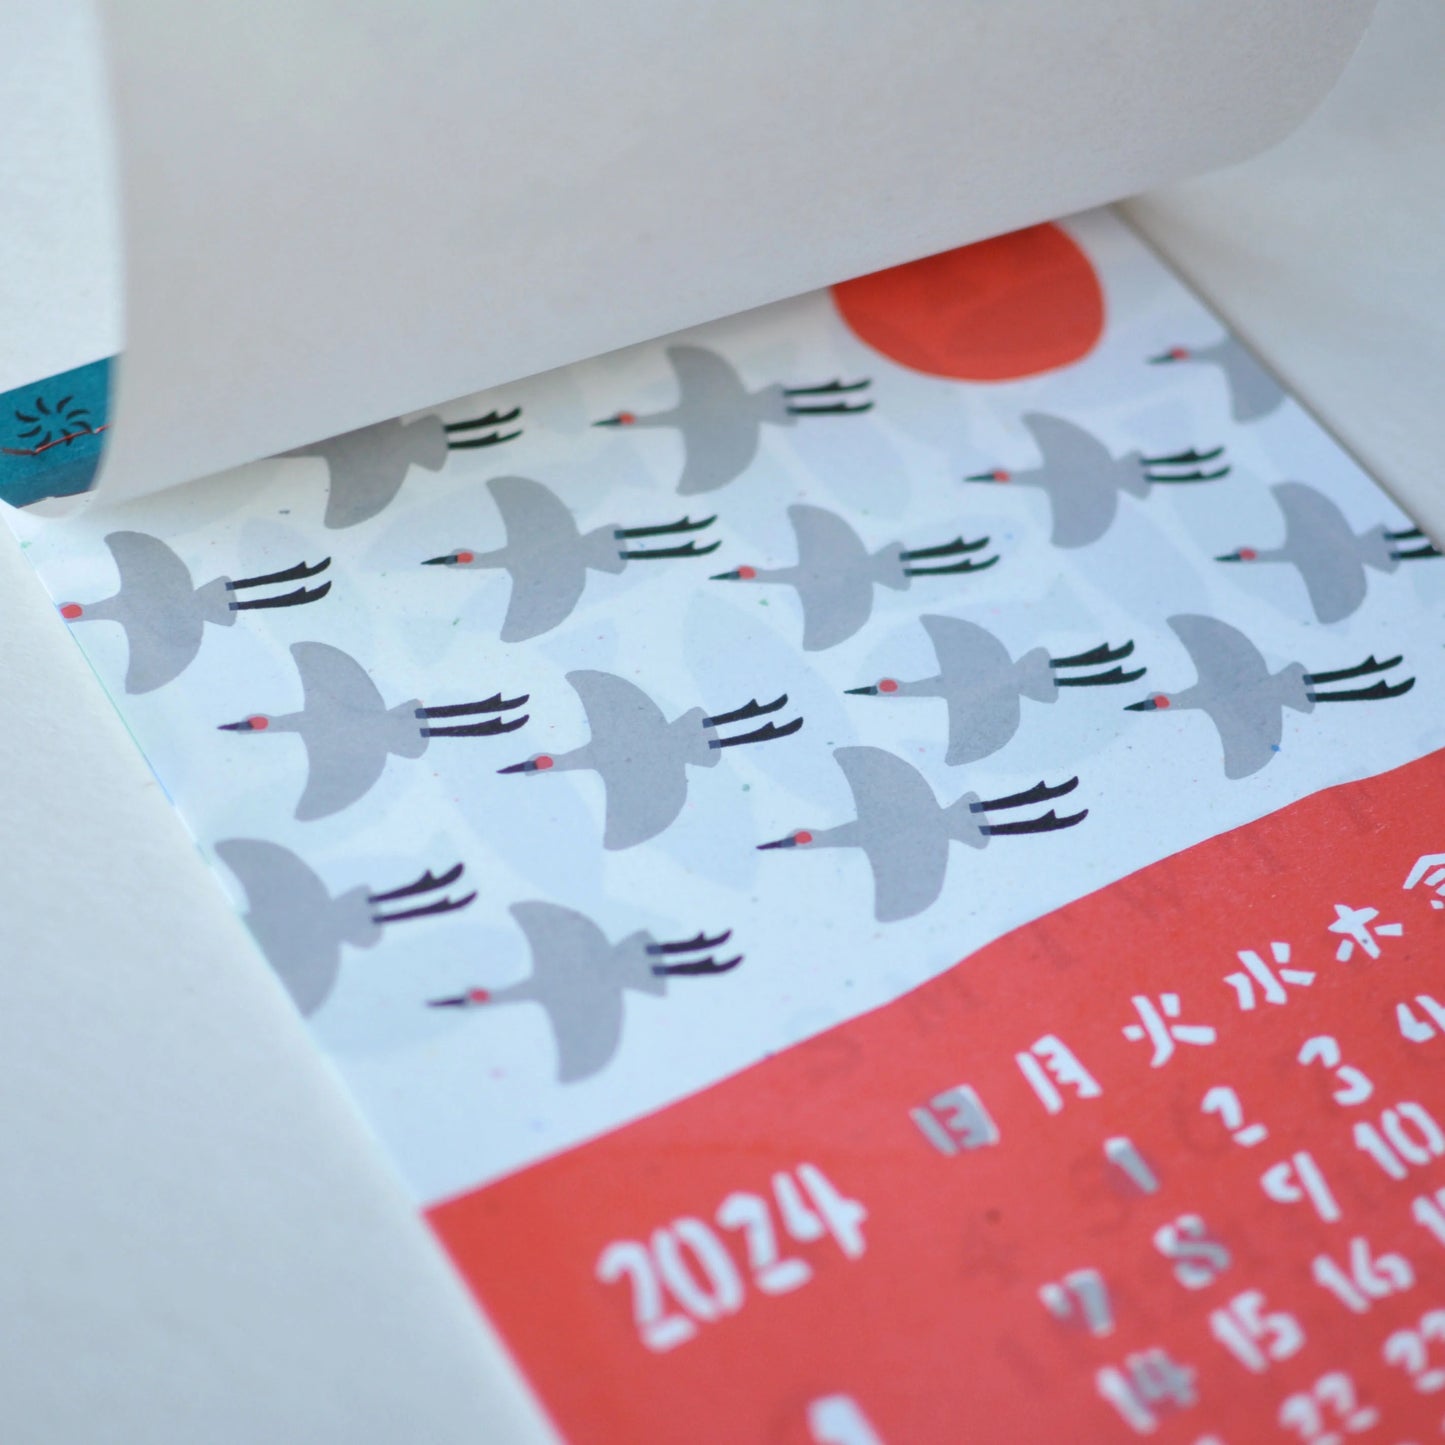 2024 Calendar / Yotsume Dye House